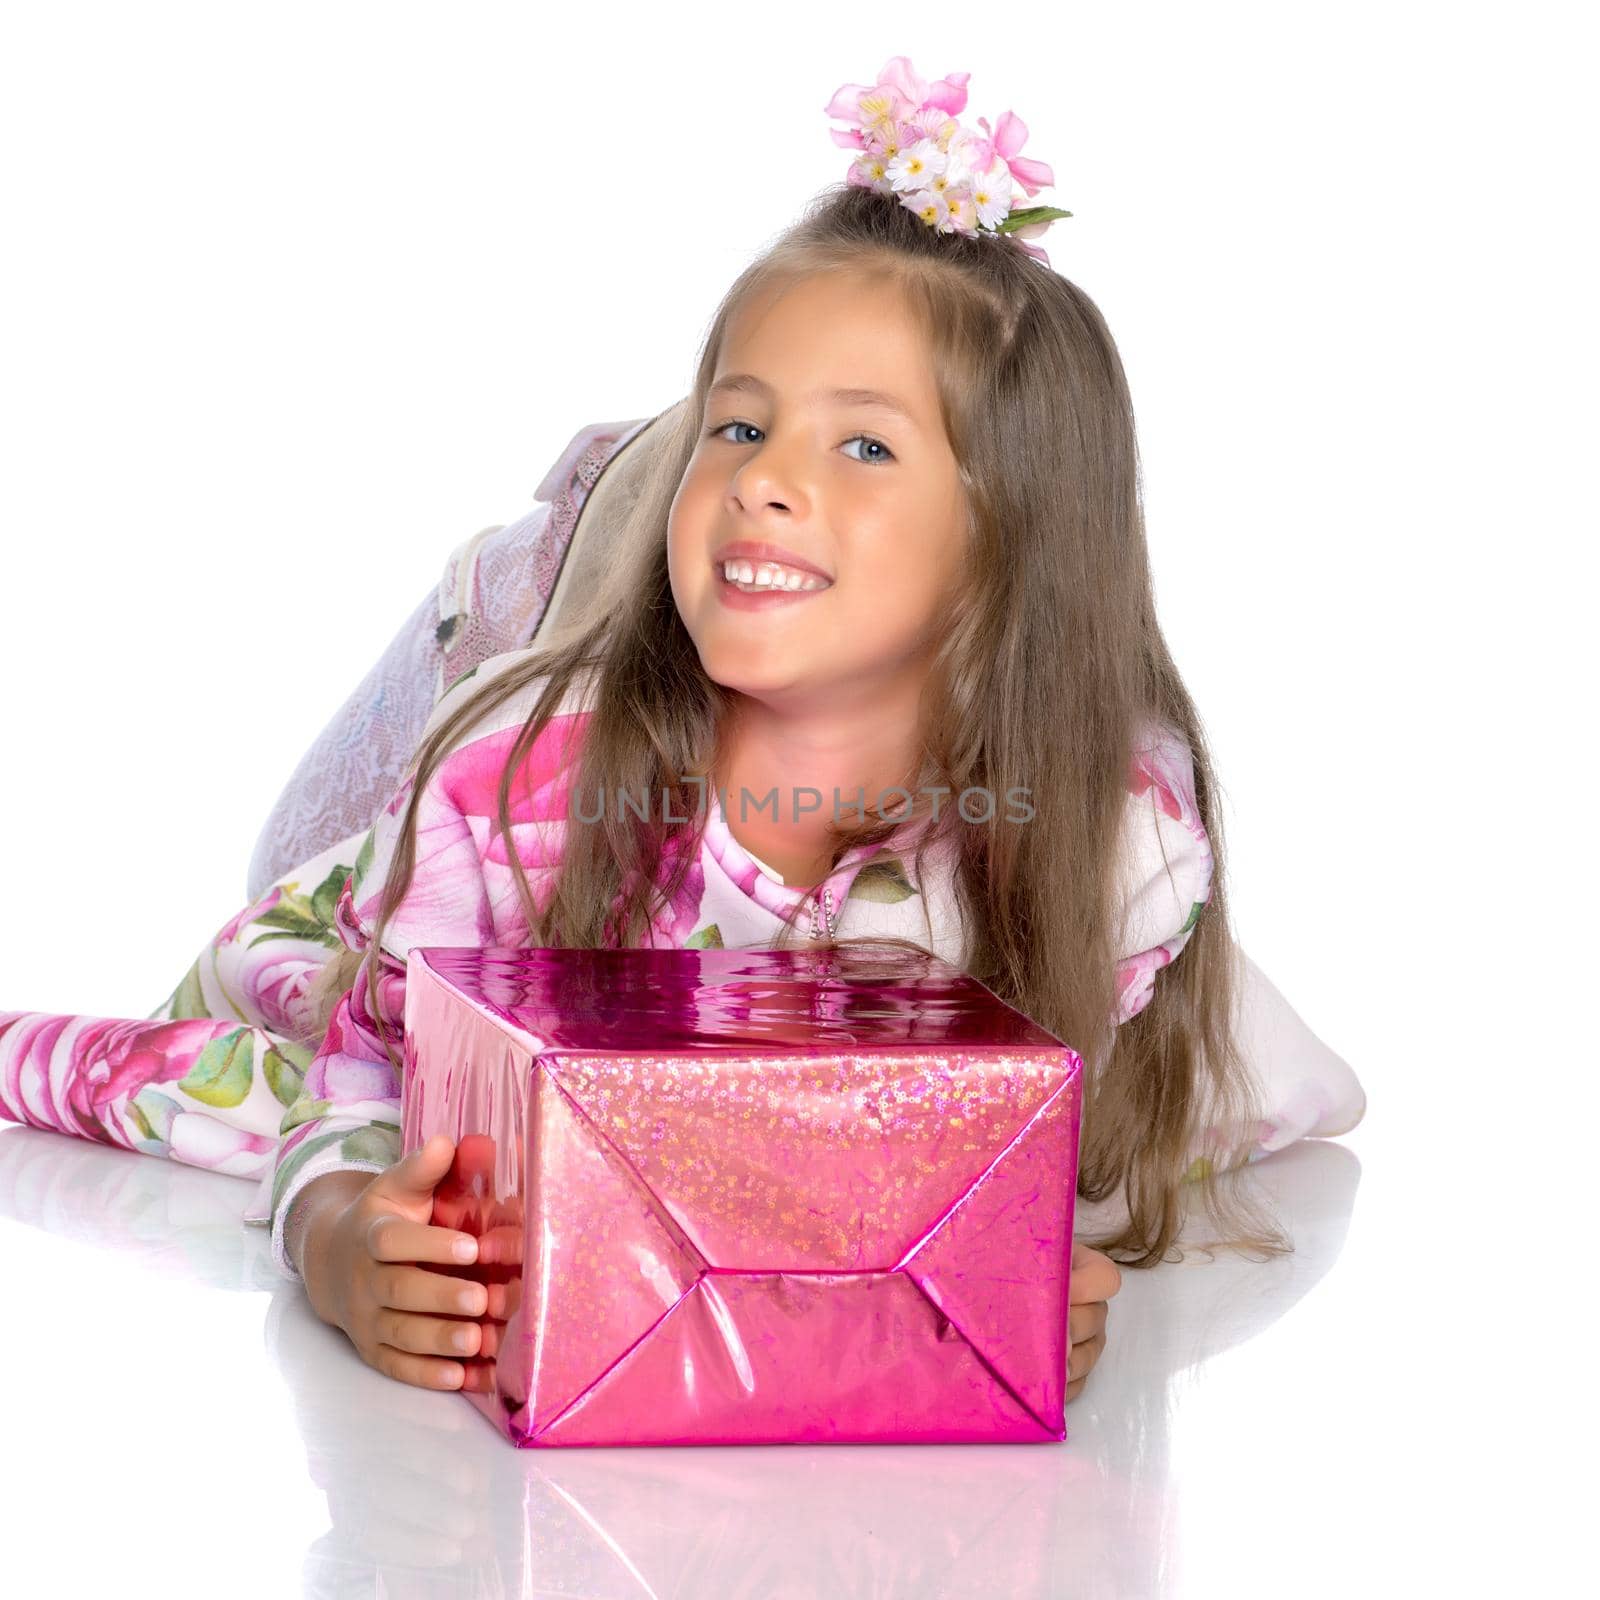 Little girl with a gift by kolesnikov_studio